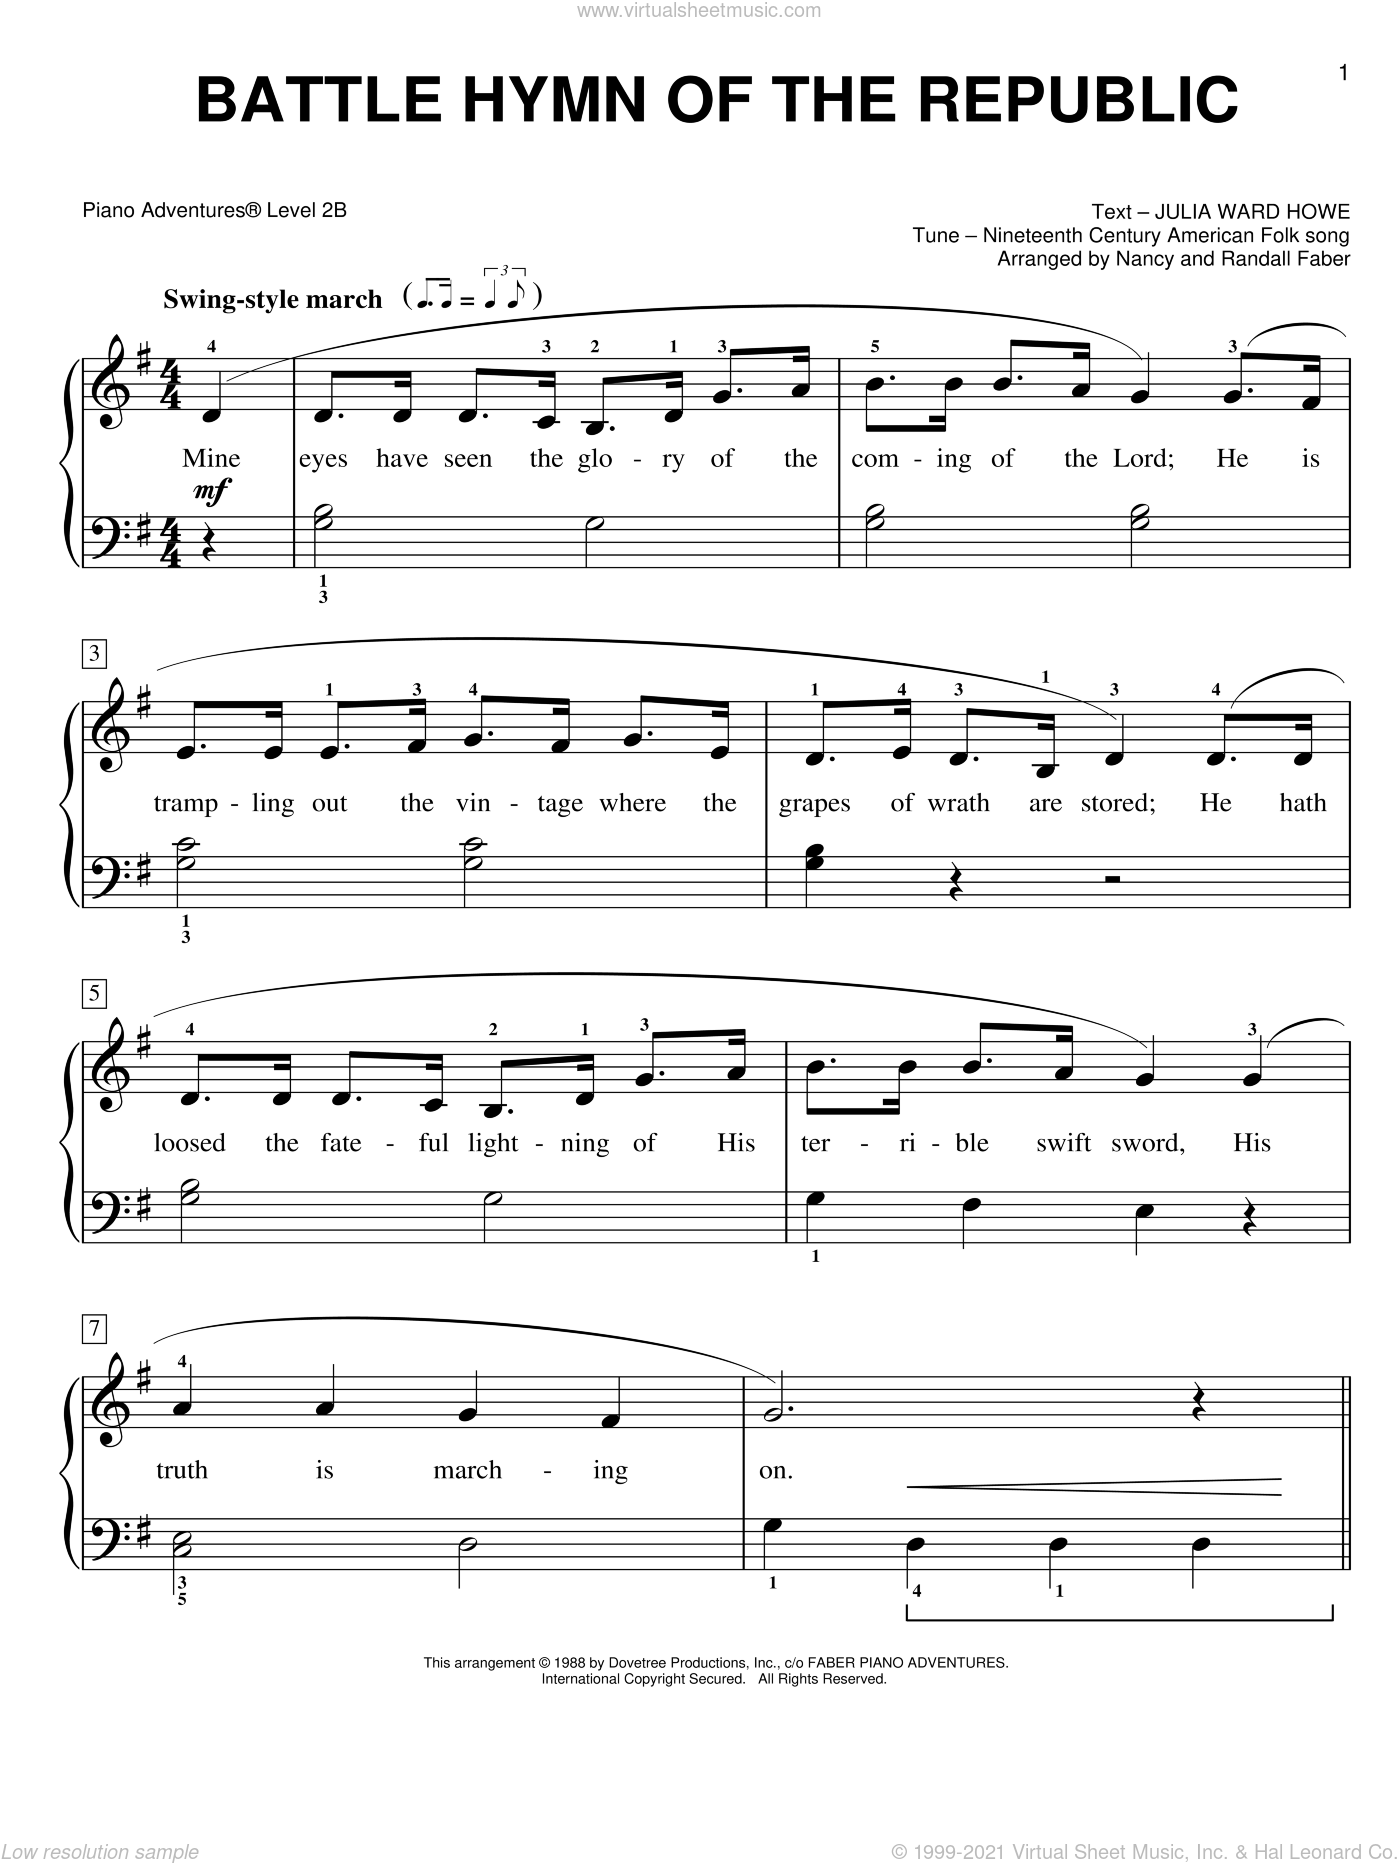 Battle Hymn of the Republic sheet music for piano solo (PDF)